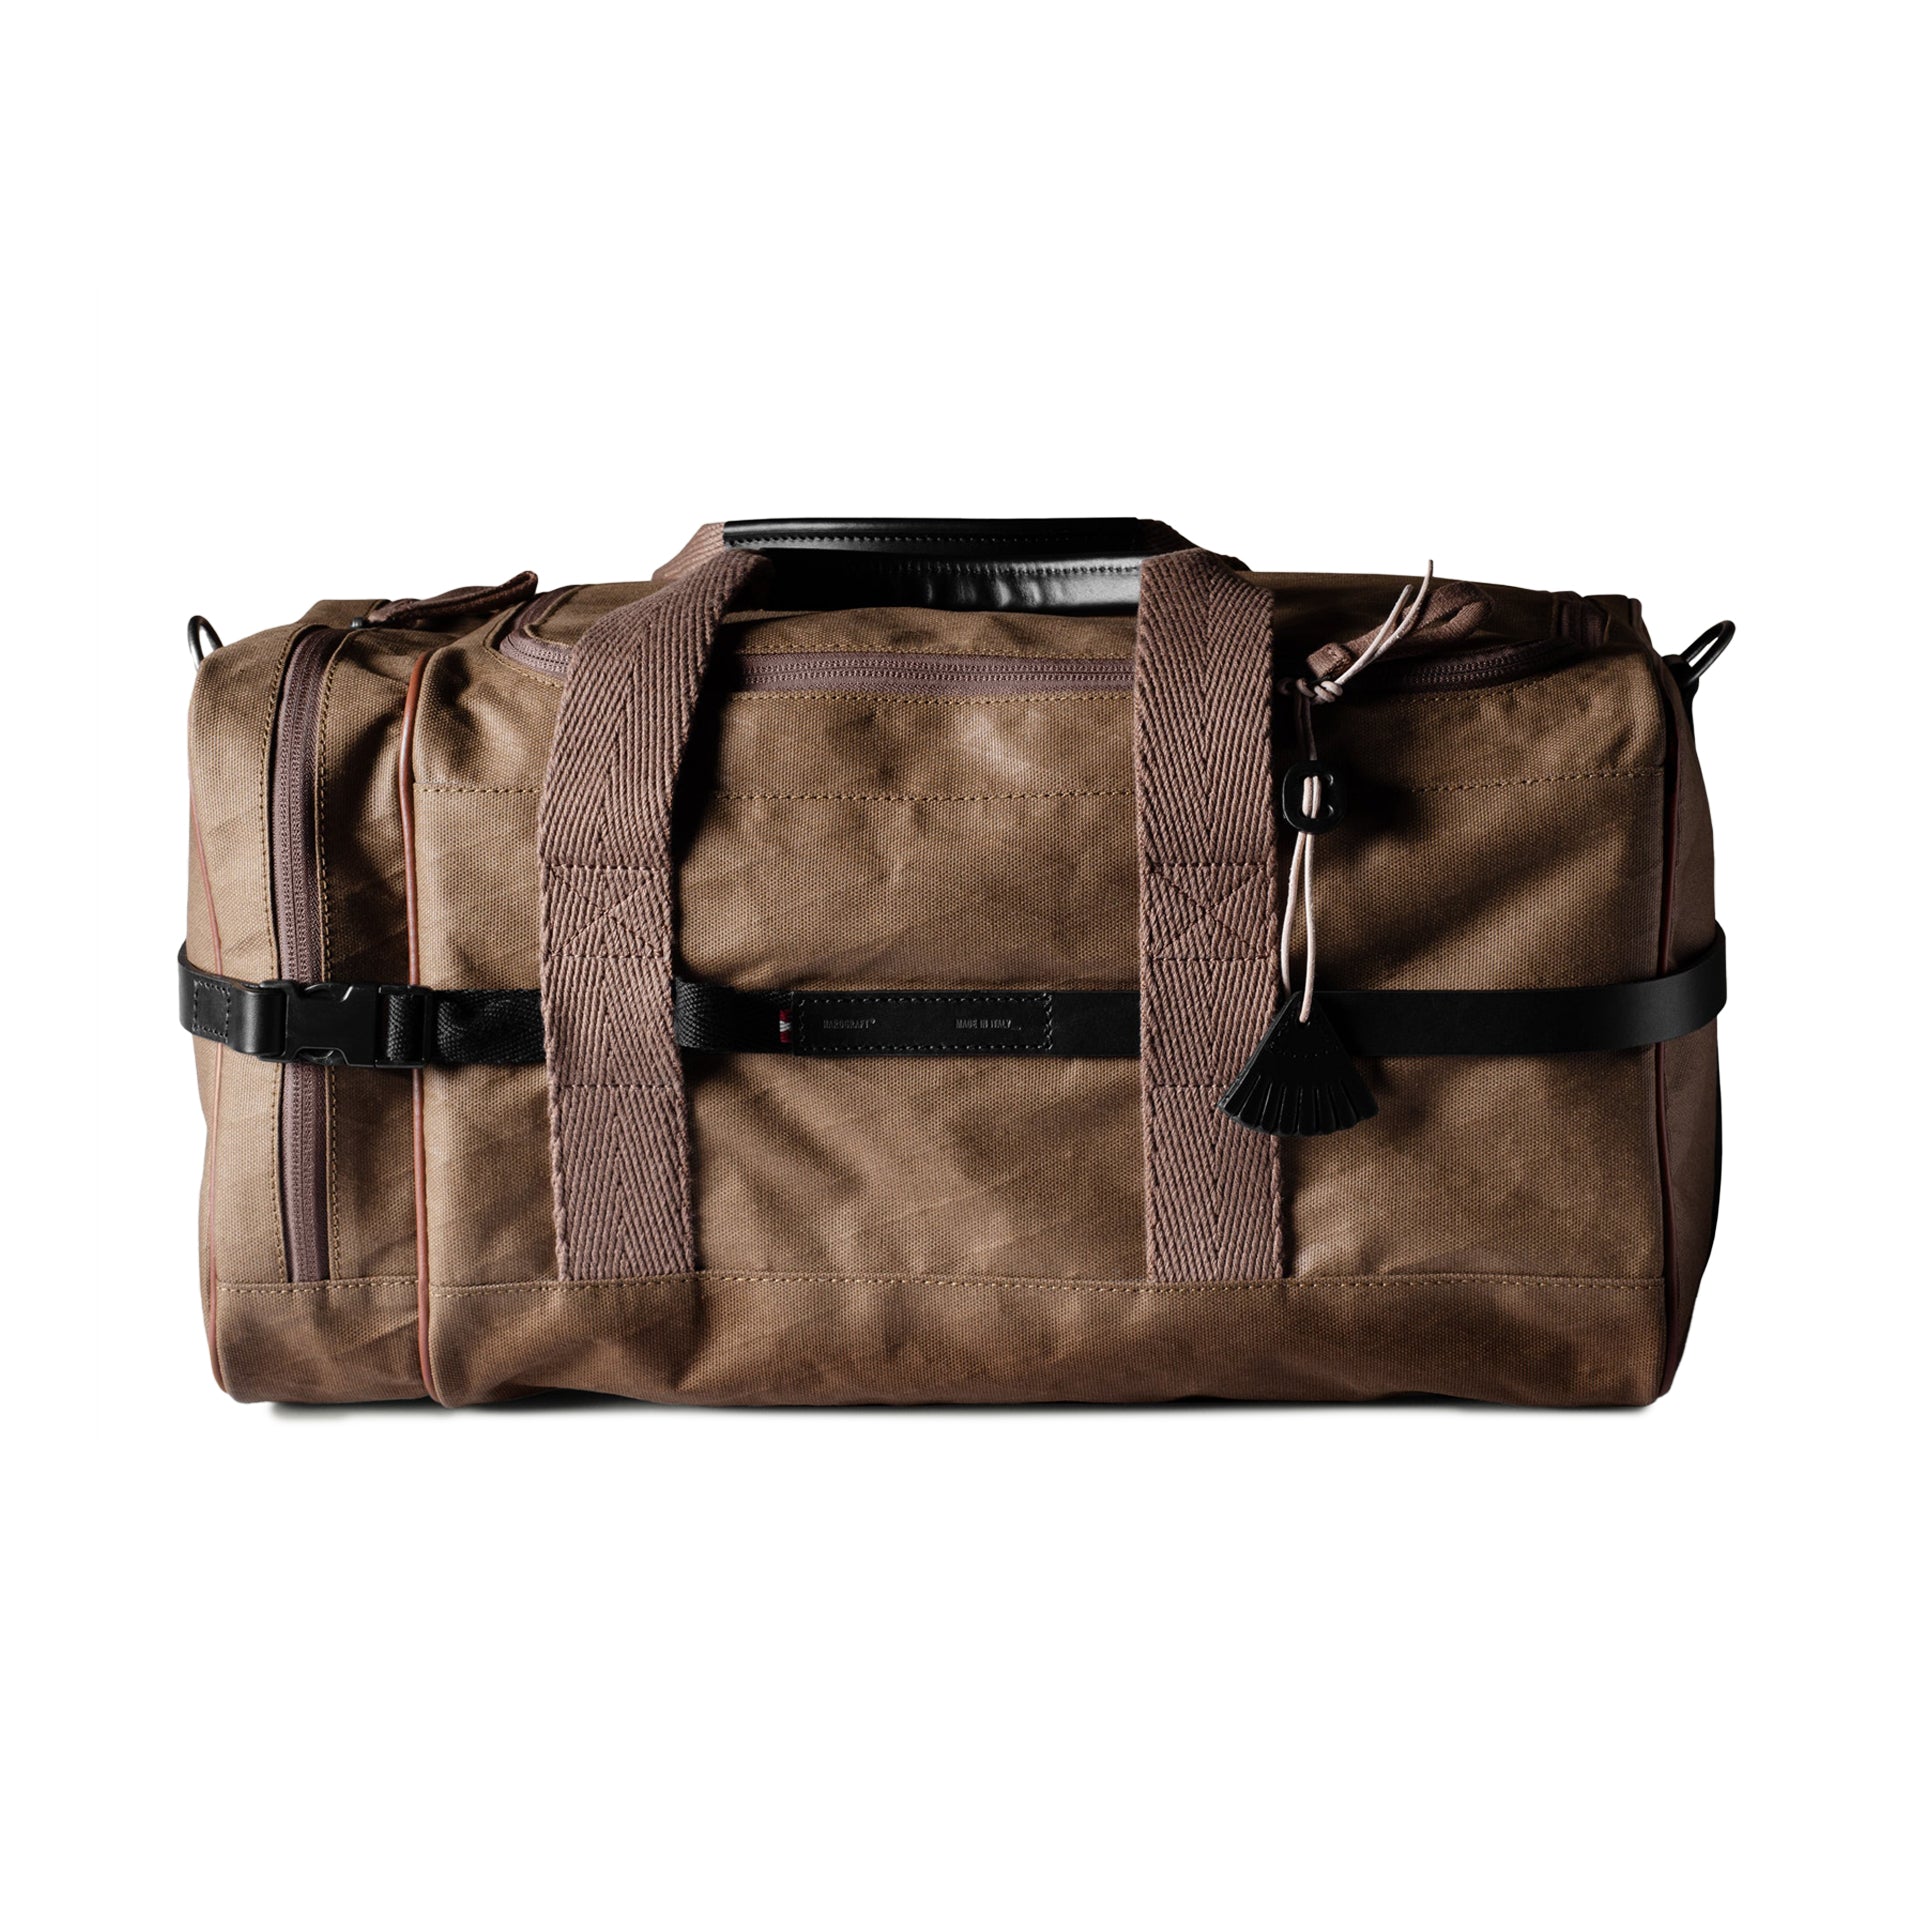 Hardgraft All Set Duffle Bag | Uncrate Supply